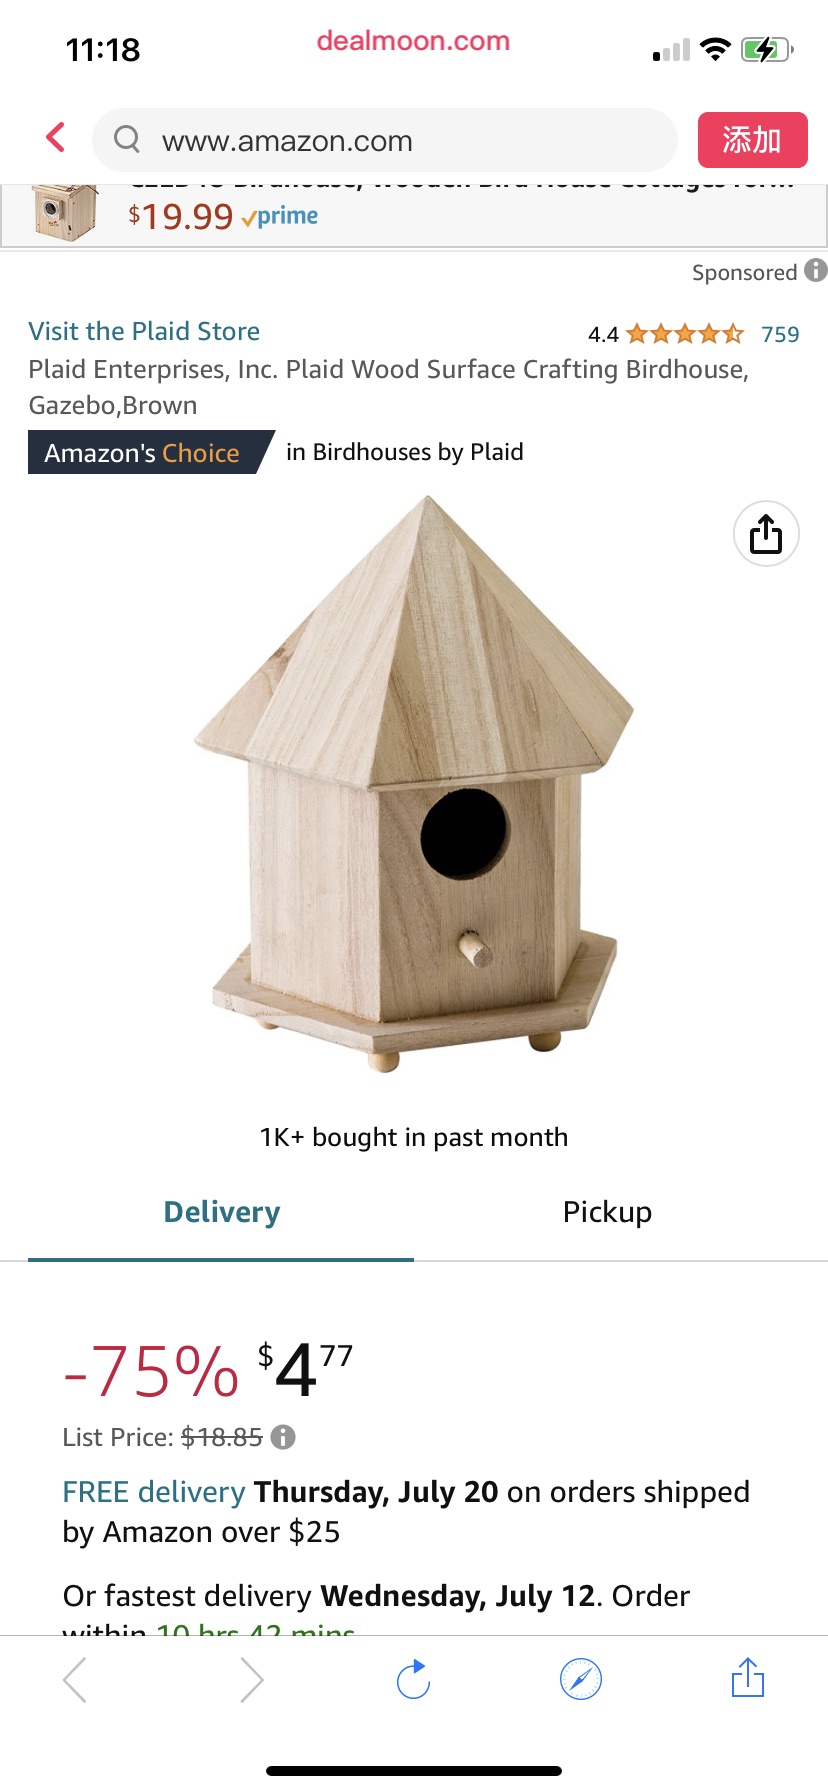 Amazon.com: Plaid Enterprises, Inc. Plaid Wood Surface Crafting Birdhouse, Gazebo,Brown : Patio, Lawn & Garden木质 木质鸟窝